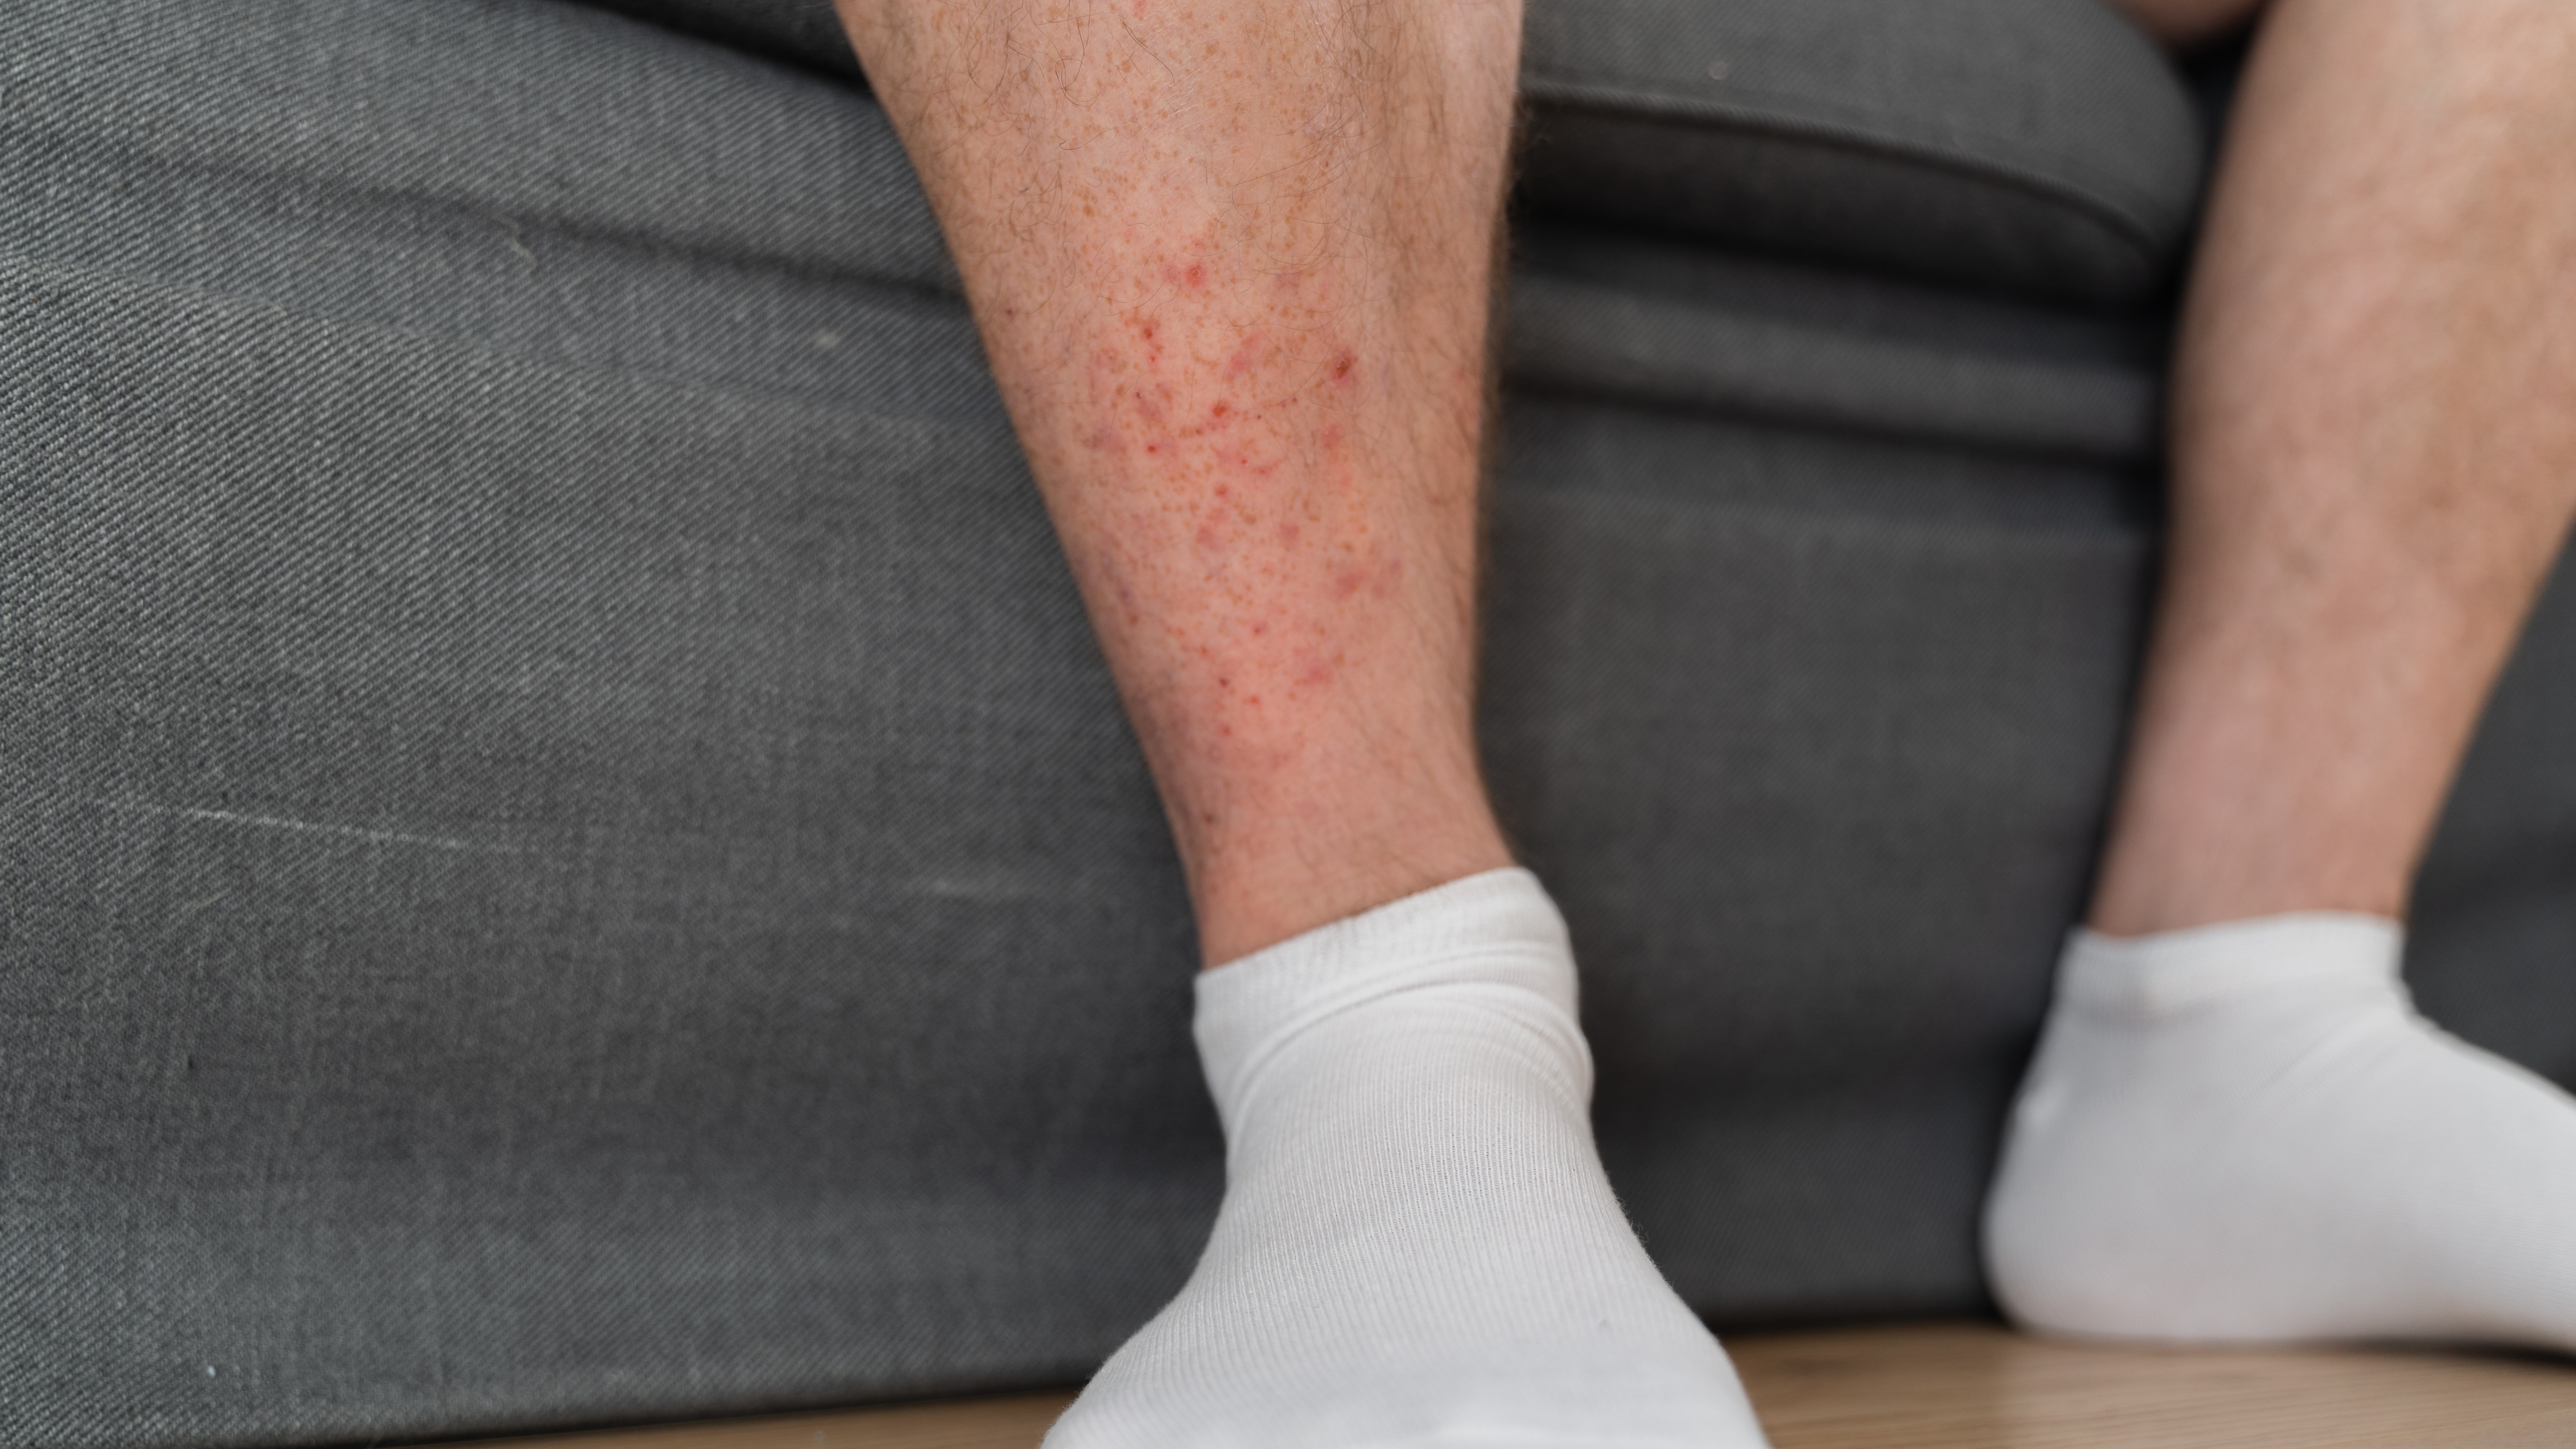 Hiker's legs with rash